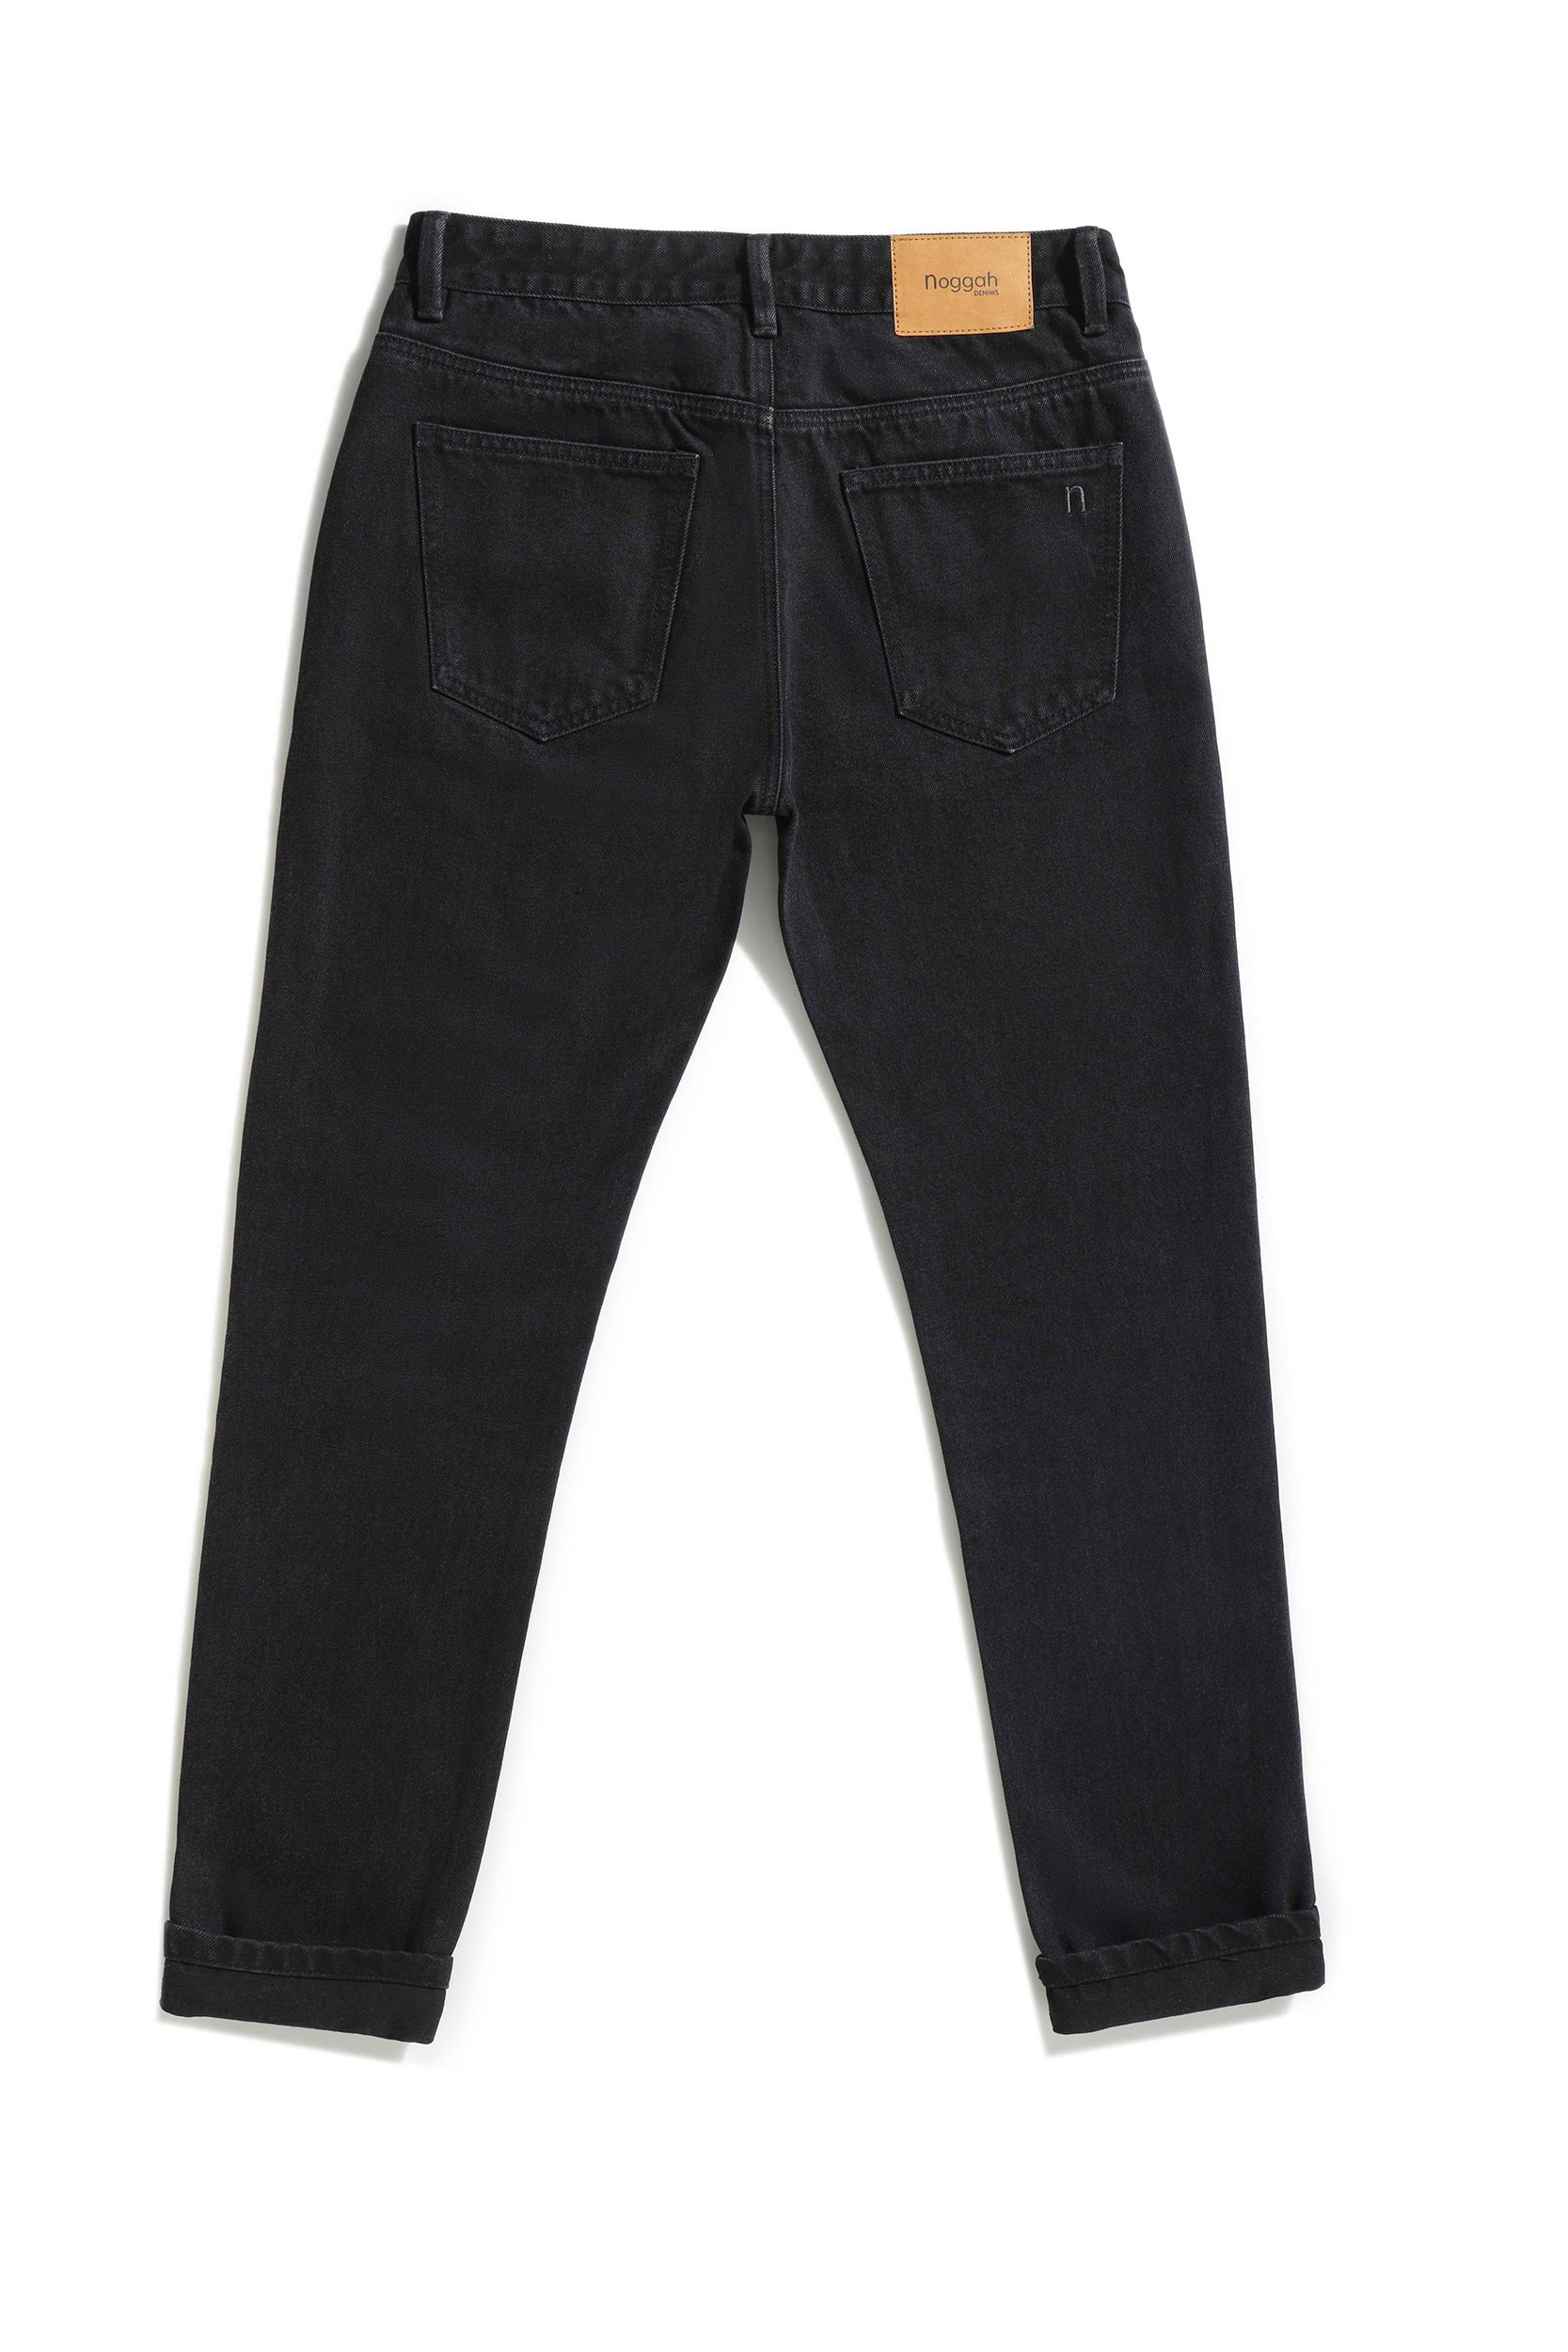 Buy SINAN Boys Jeans 211 Denim Full Pant (26) at Amazon.in